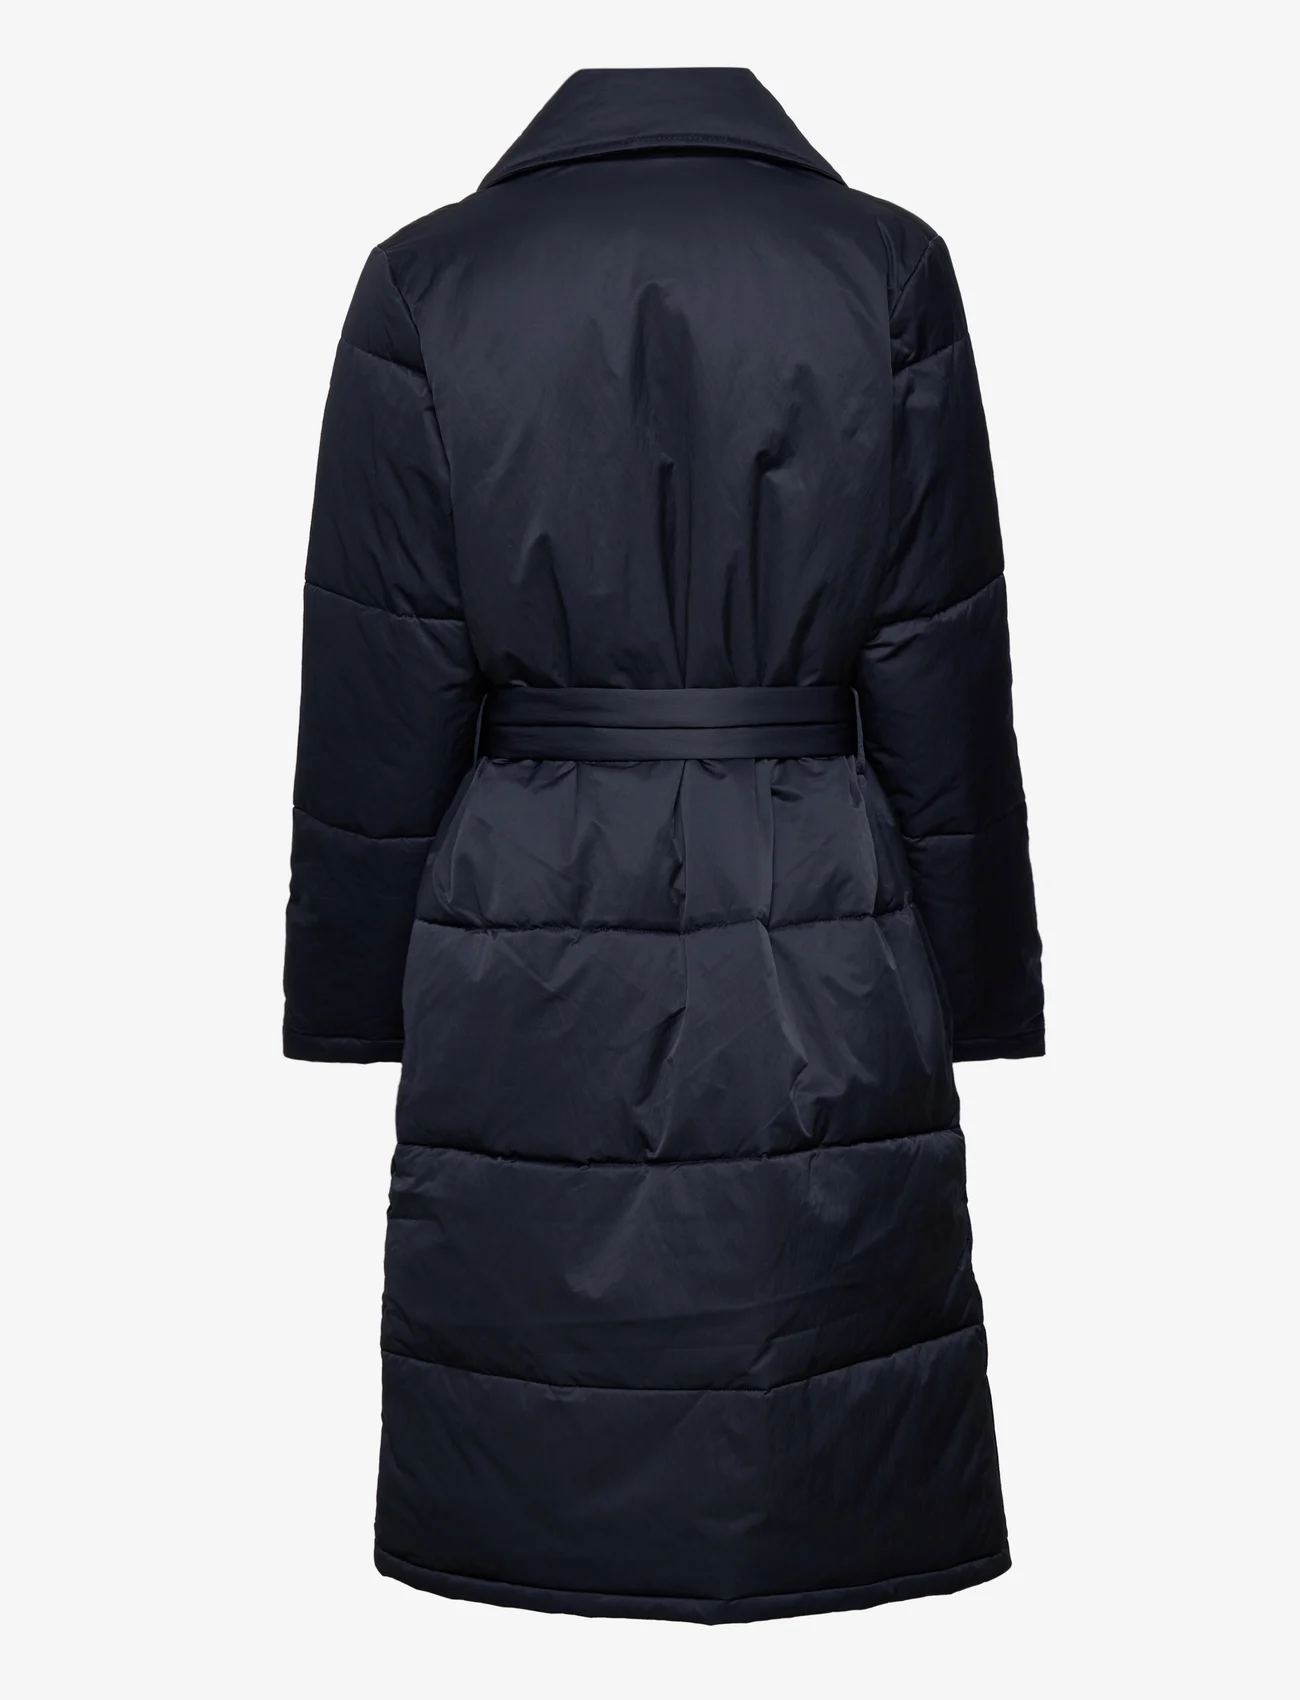 Noa Noa - Heavy outerwear - winter jackets - dark navy - 1